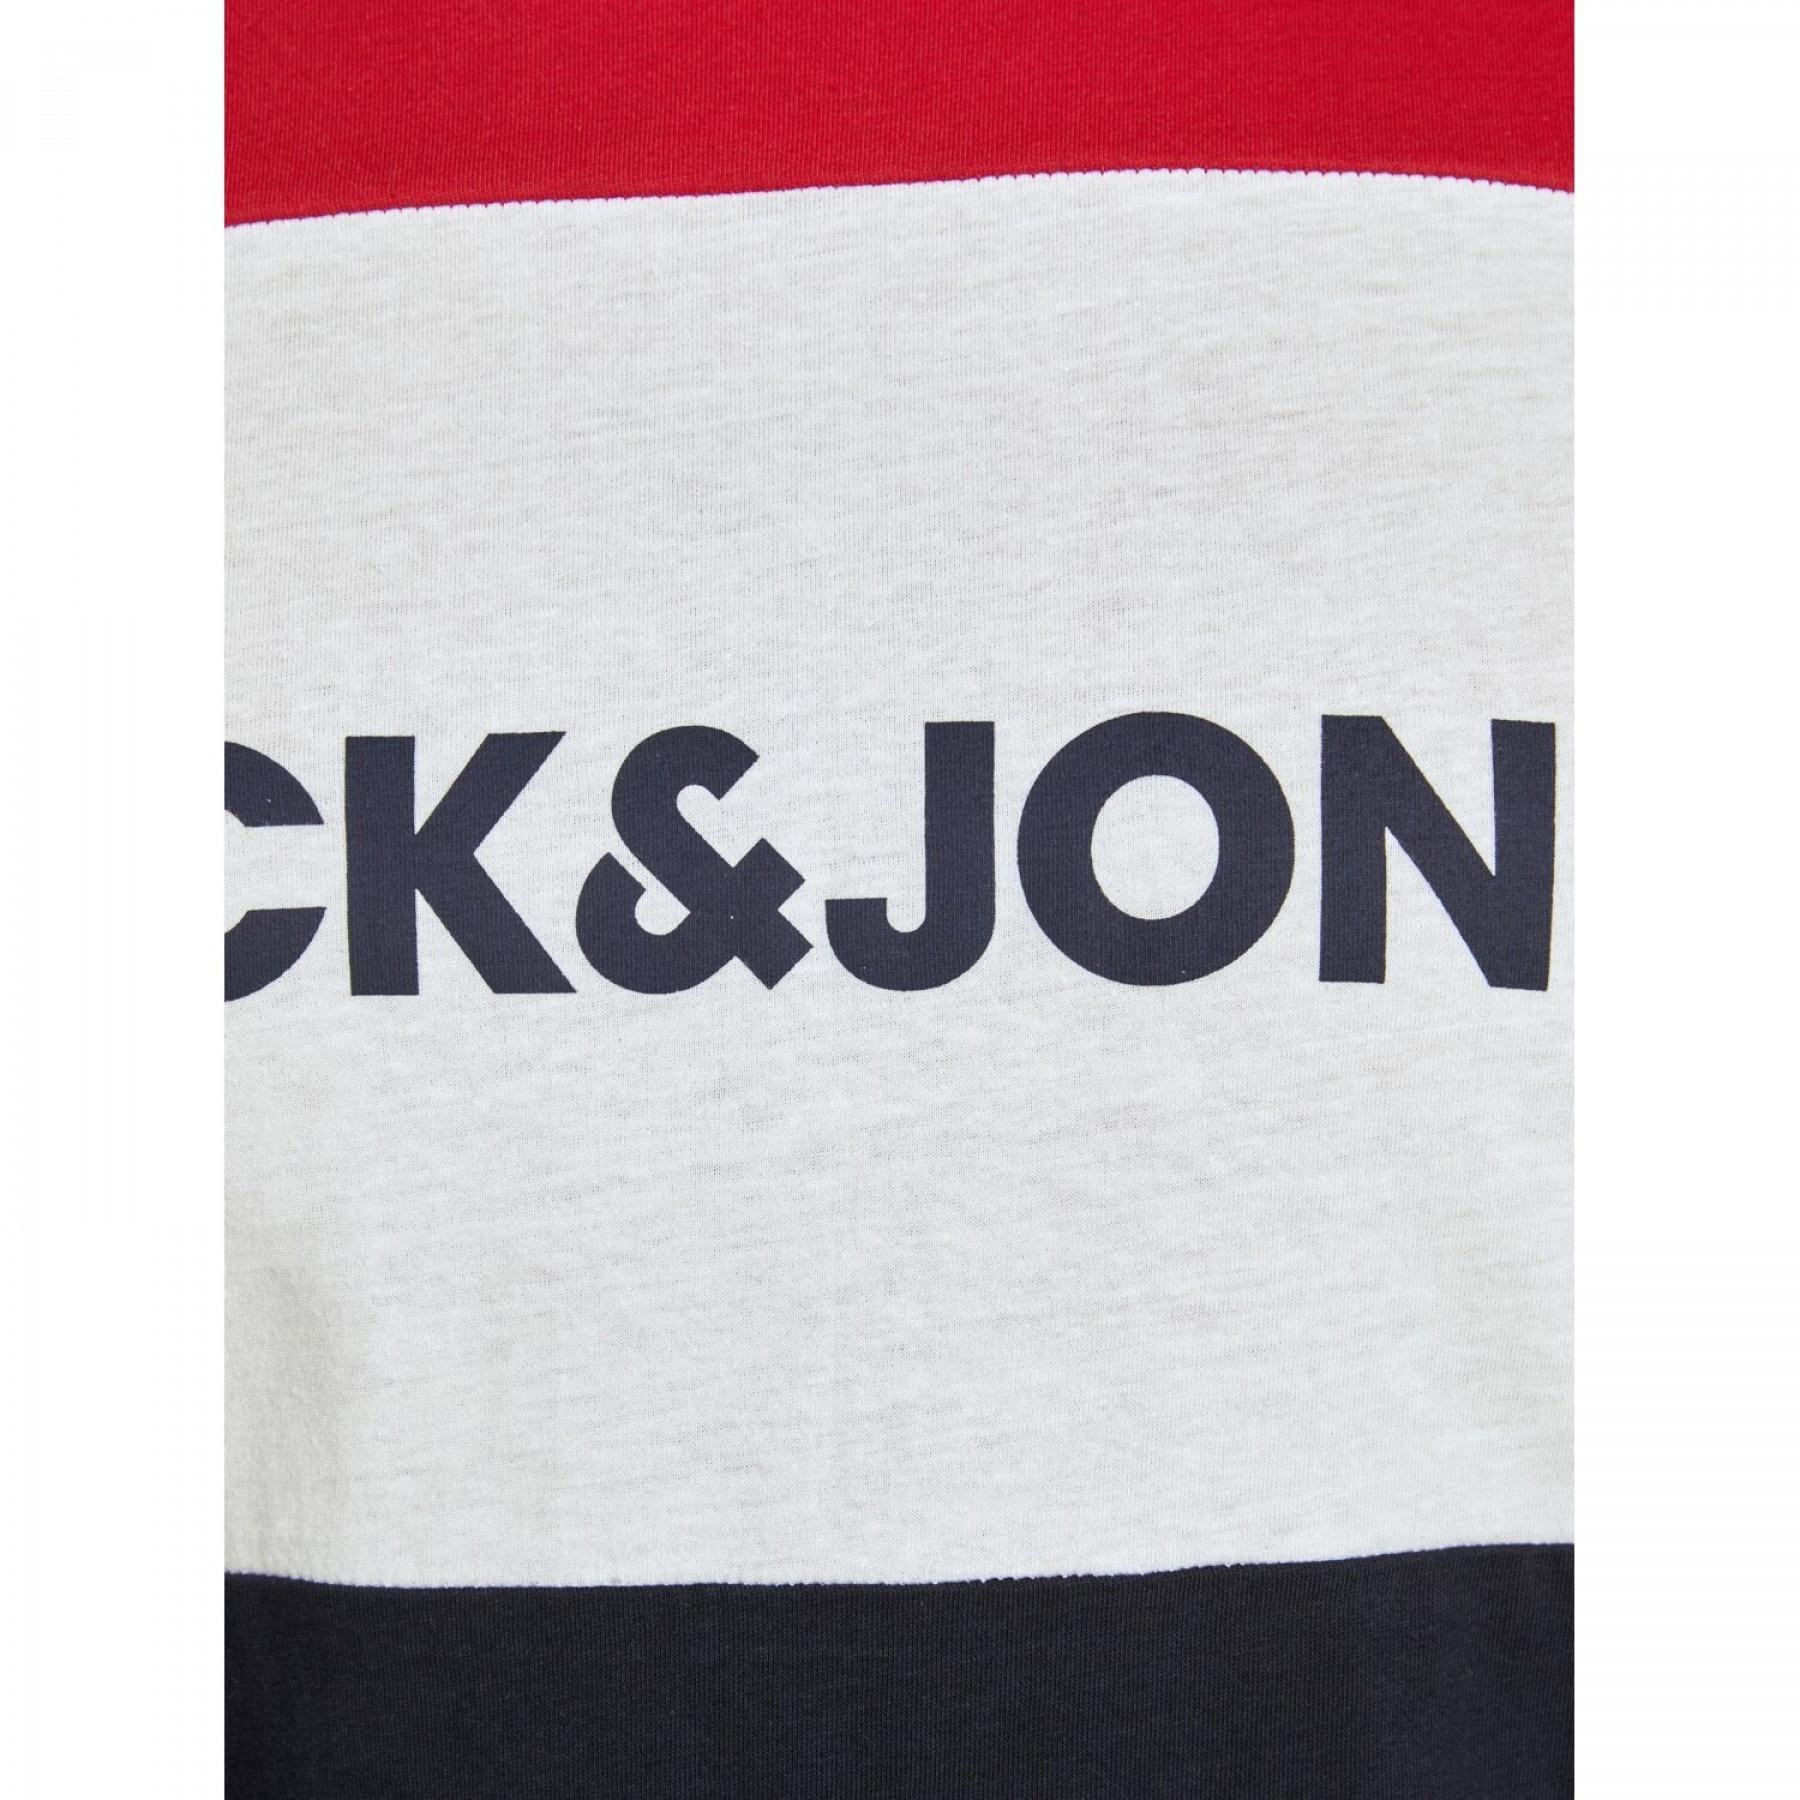 Koszulka Jack & Jones Logo blocking